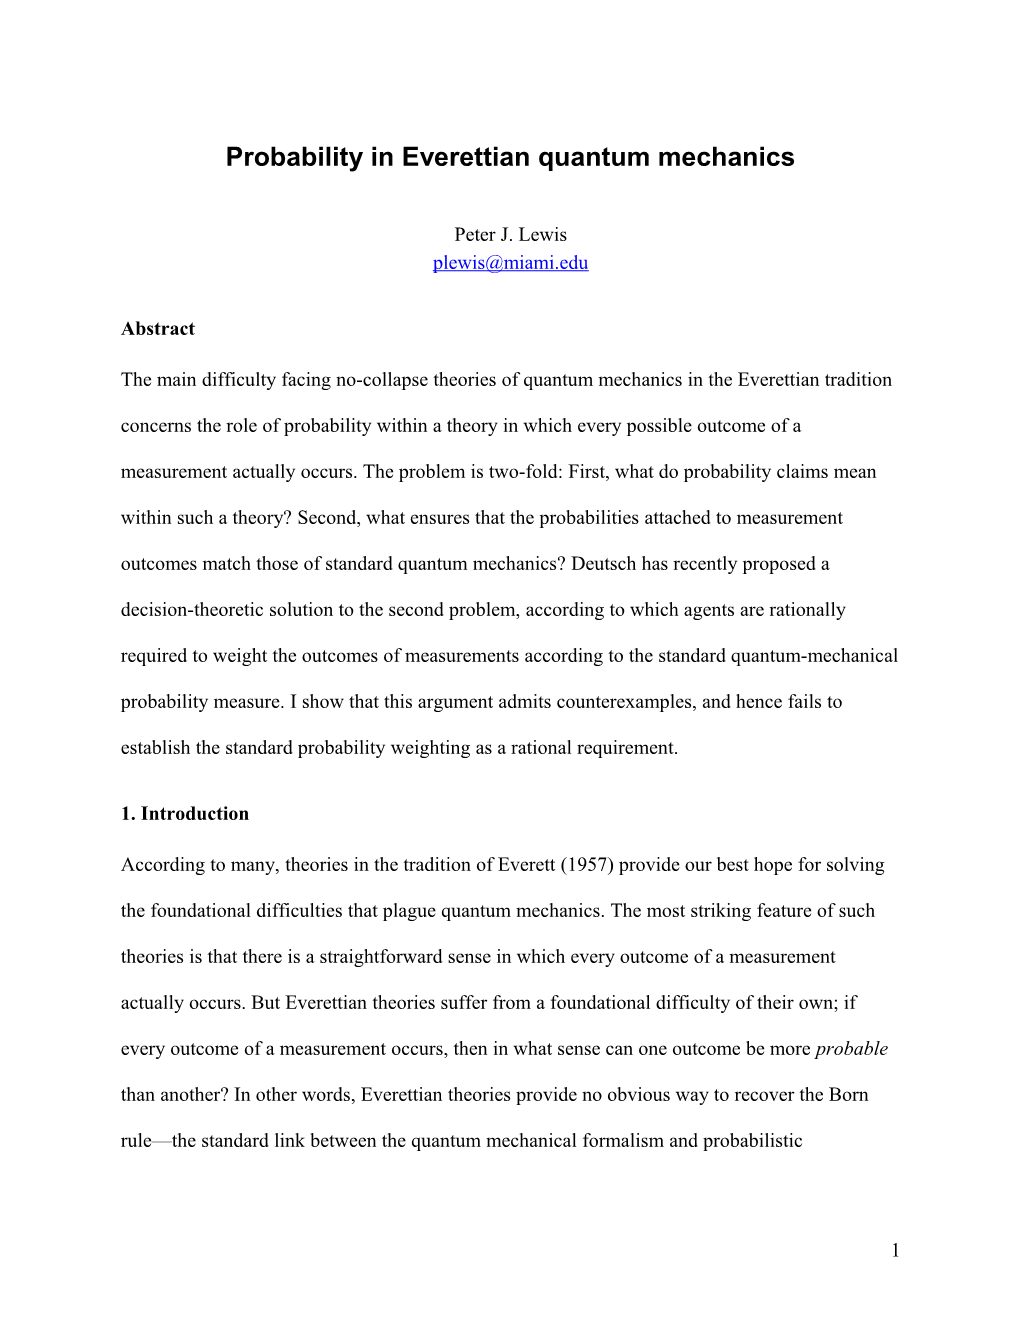 Probability in Everettian Quantum Mechanics